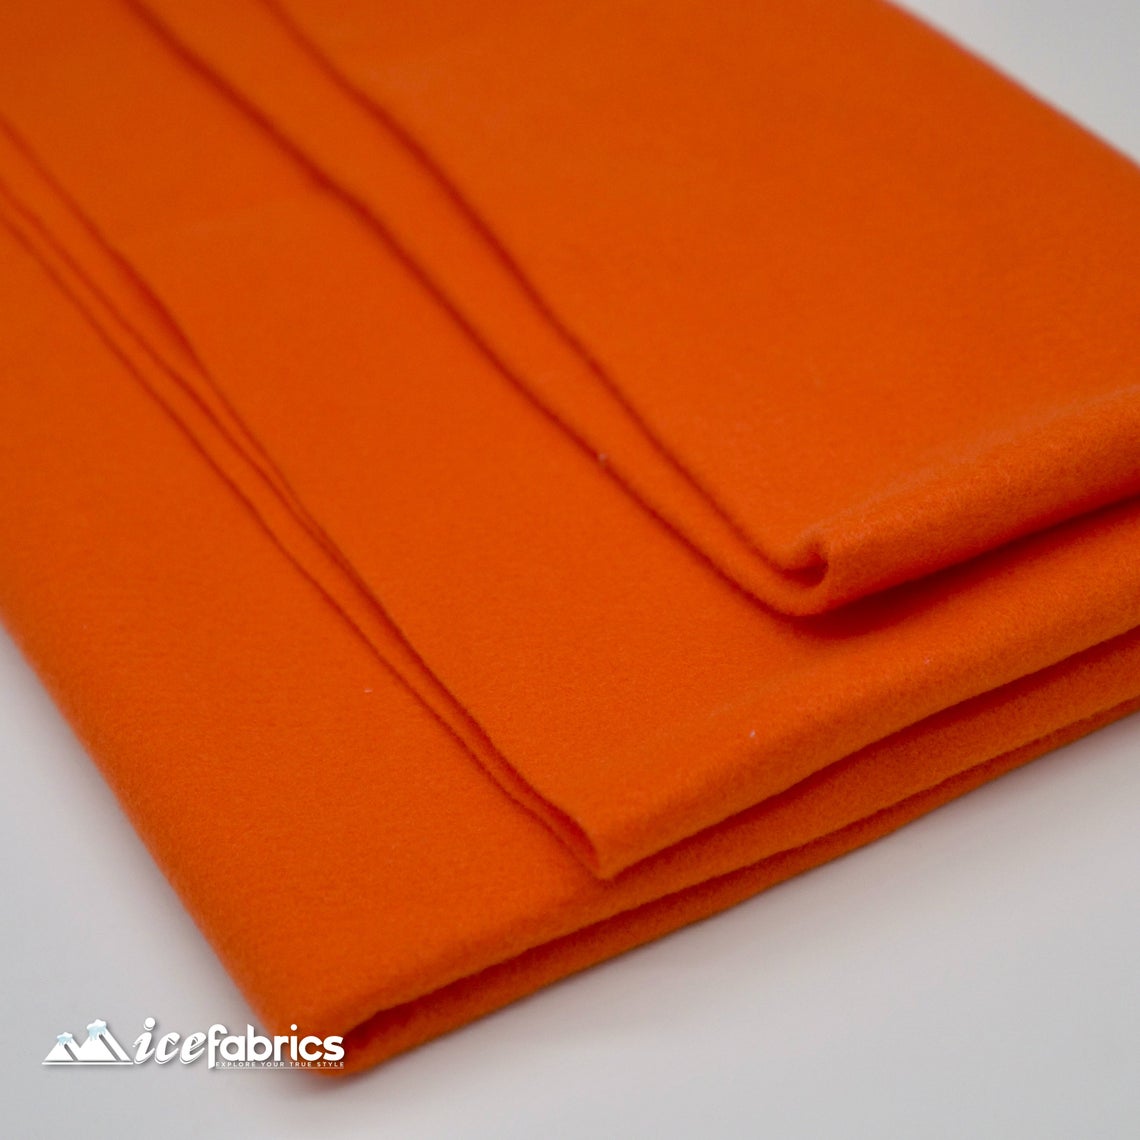 Acrylic Felt Fabric By The Roll | 20 yards | Wholesale Fabric ICE FABRICS Orange